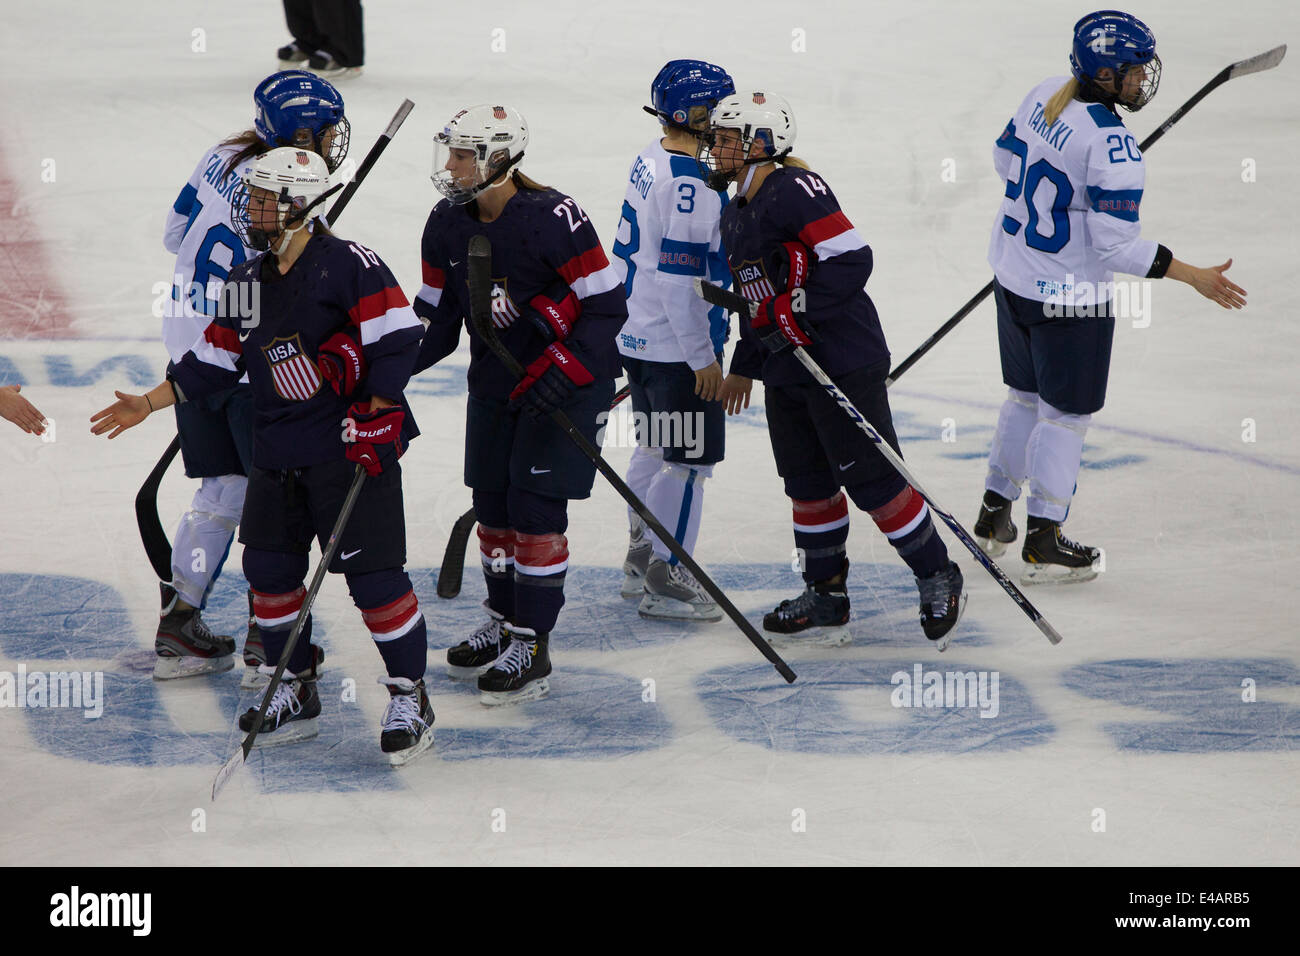 Women's Ice Hockey-USA-FIN at the Olympic Winter Games, Sochi 2014 Stock Photo